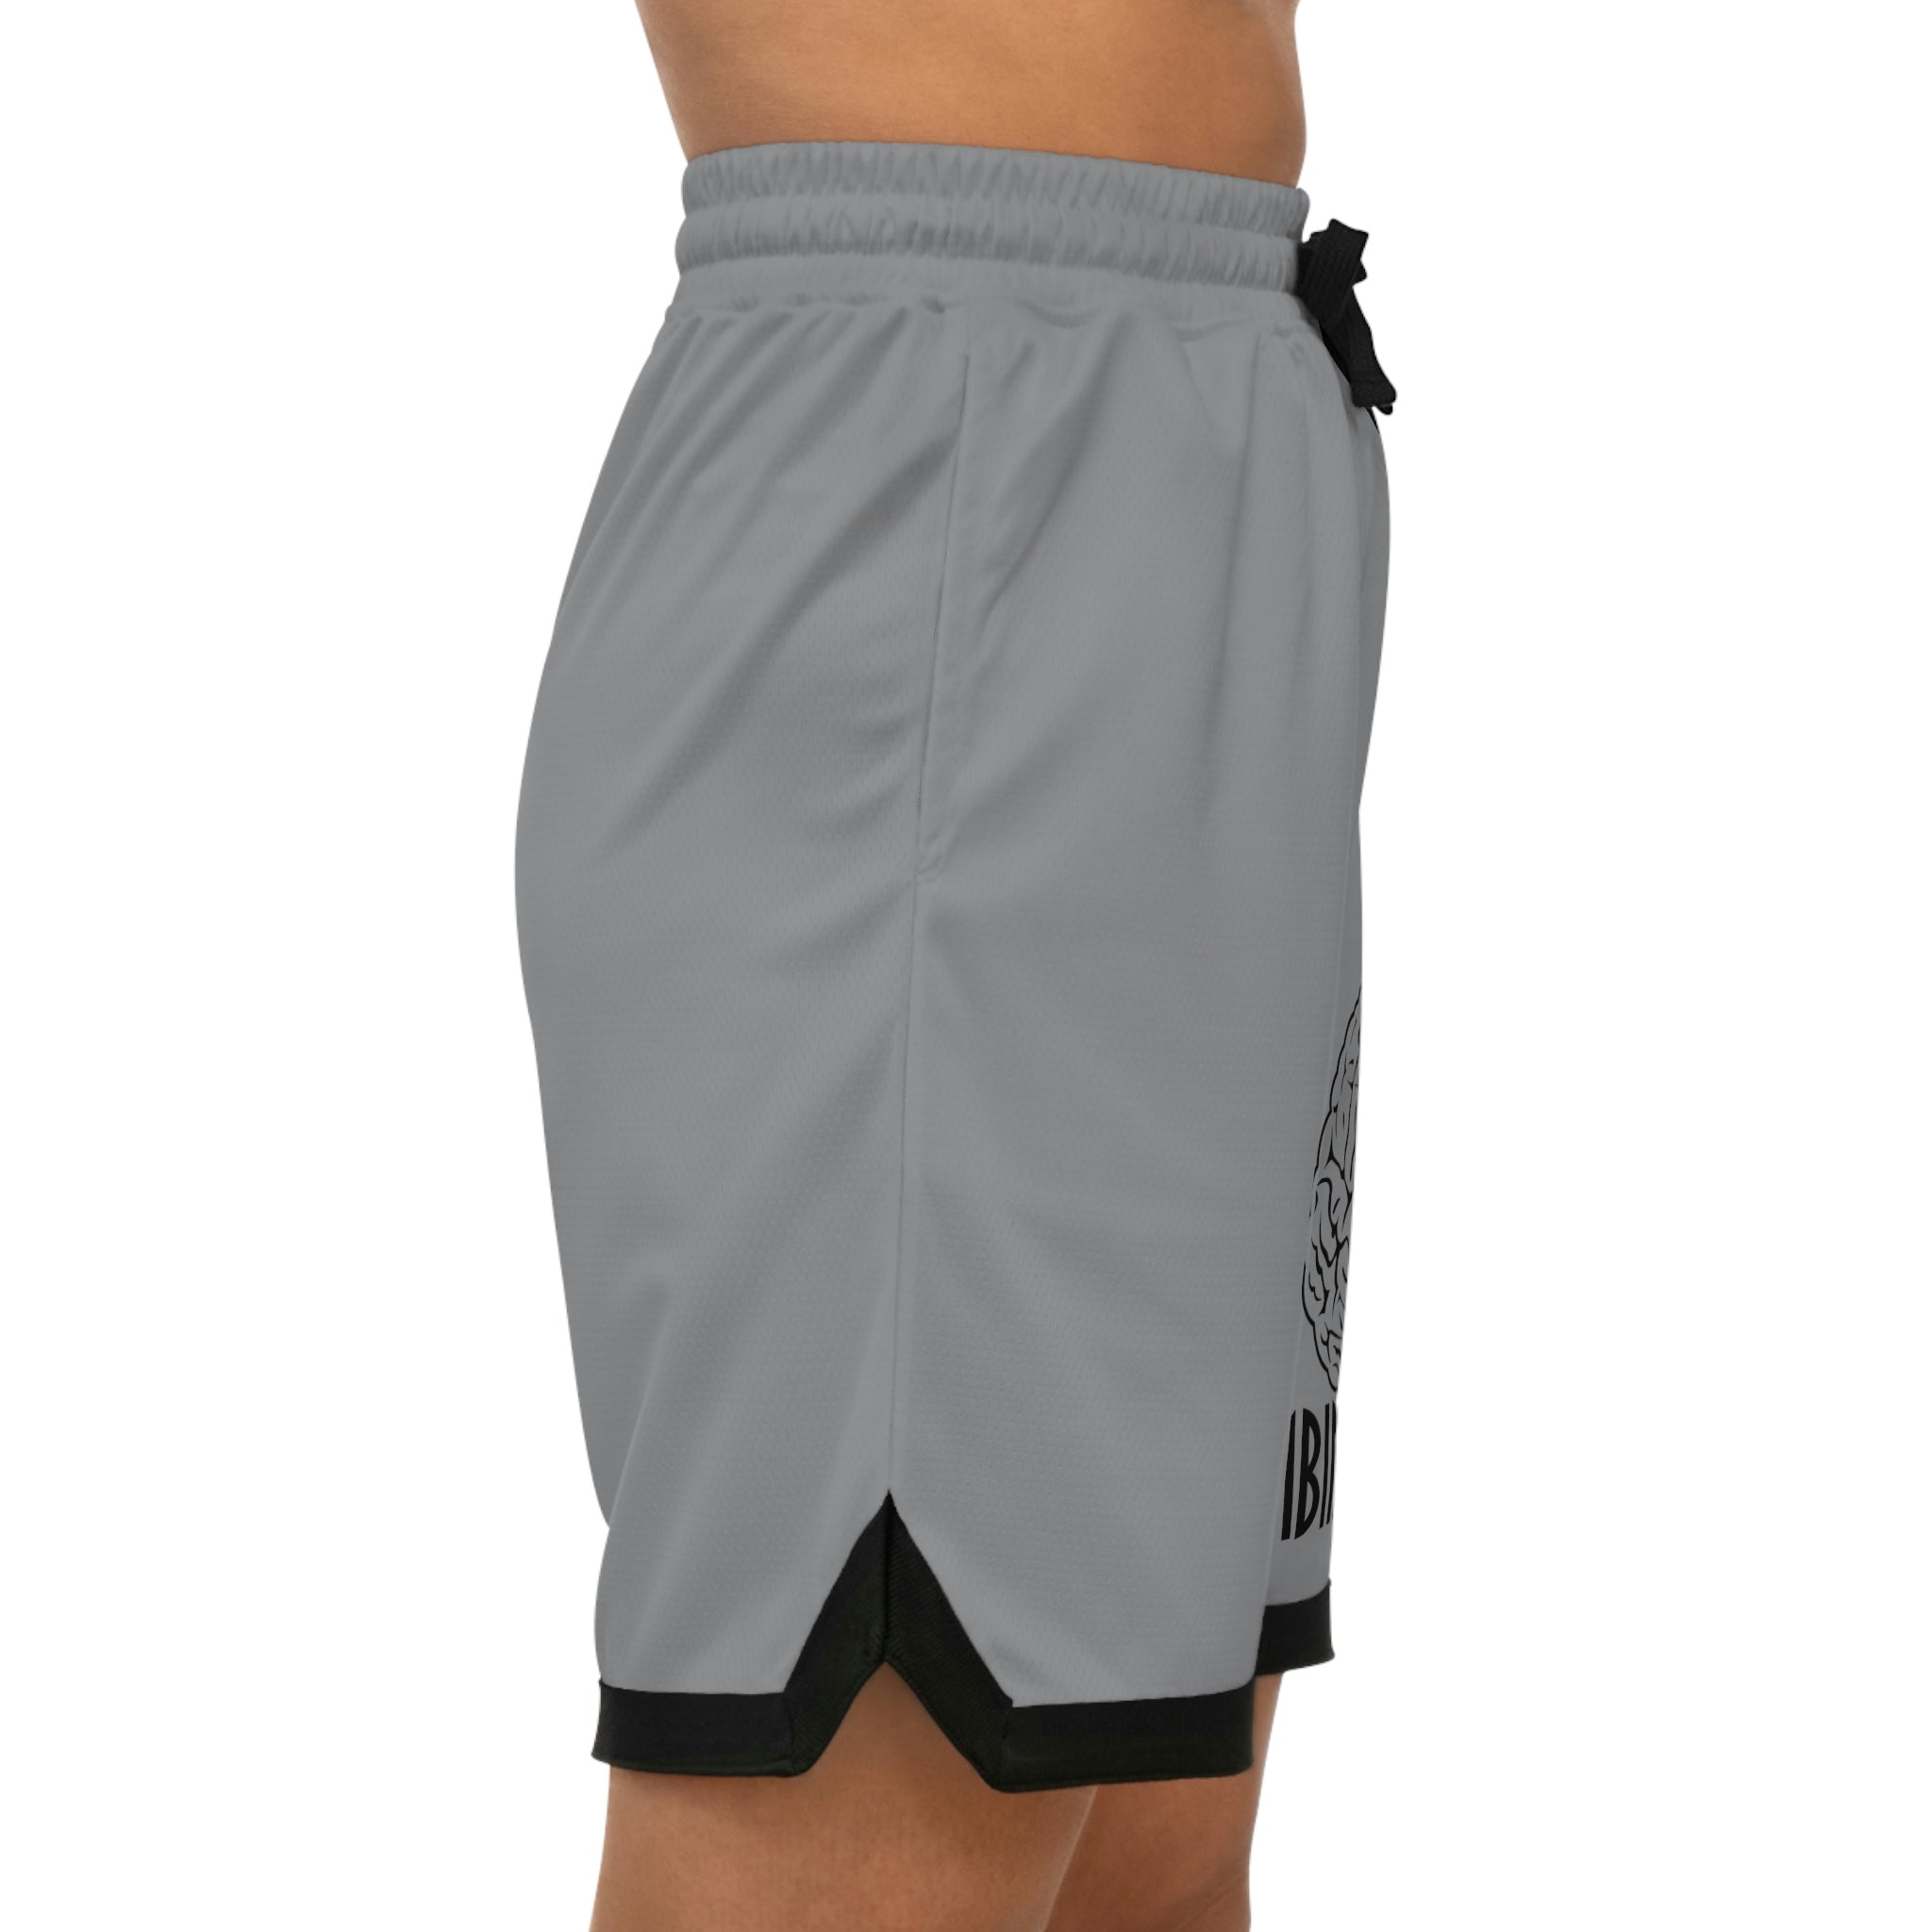 Combinedminds Basketball Shorts Grey/Black Logo